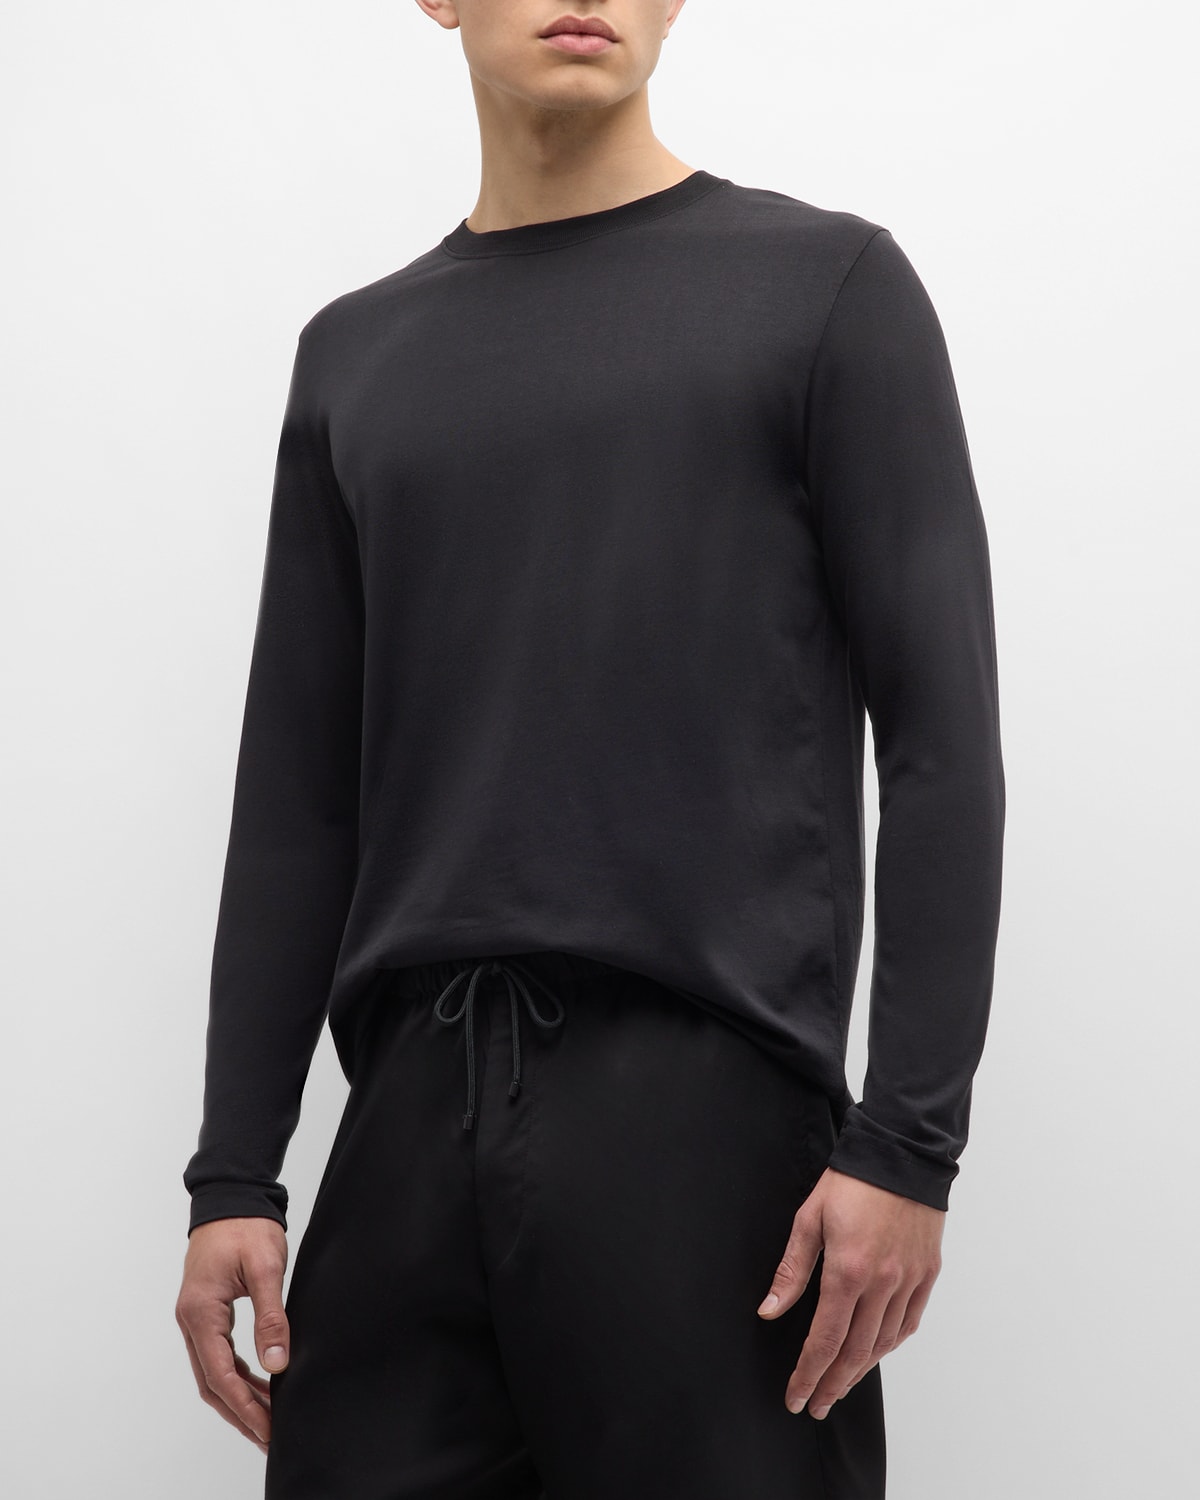 Cdlp Mens Black Long-sleeved Crewneck Relaxed-fit Woven T-shirt